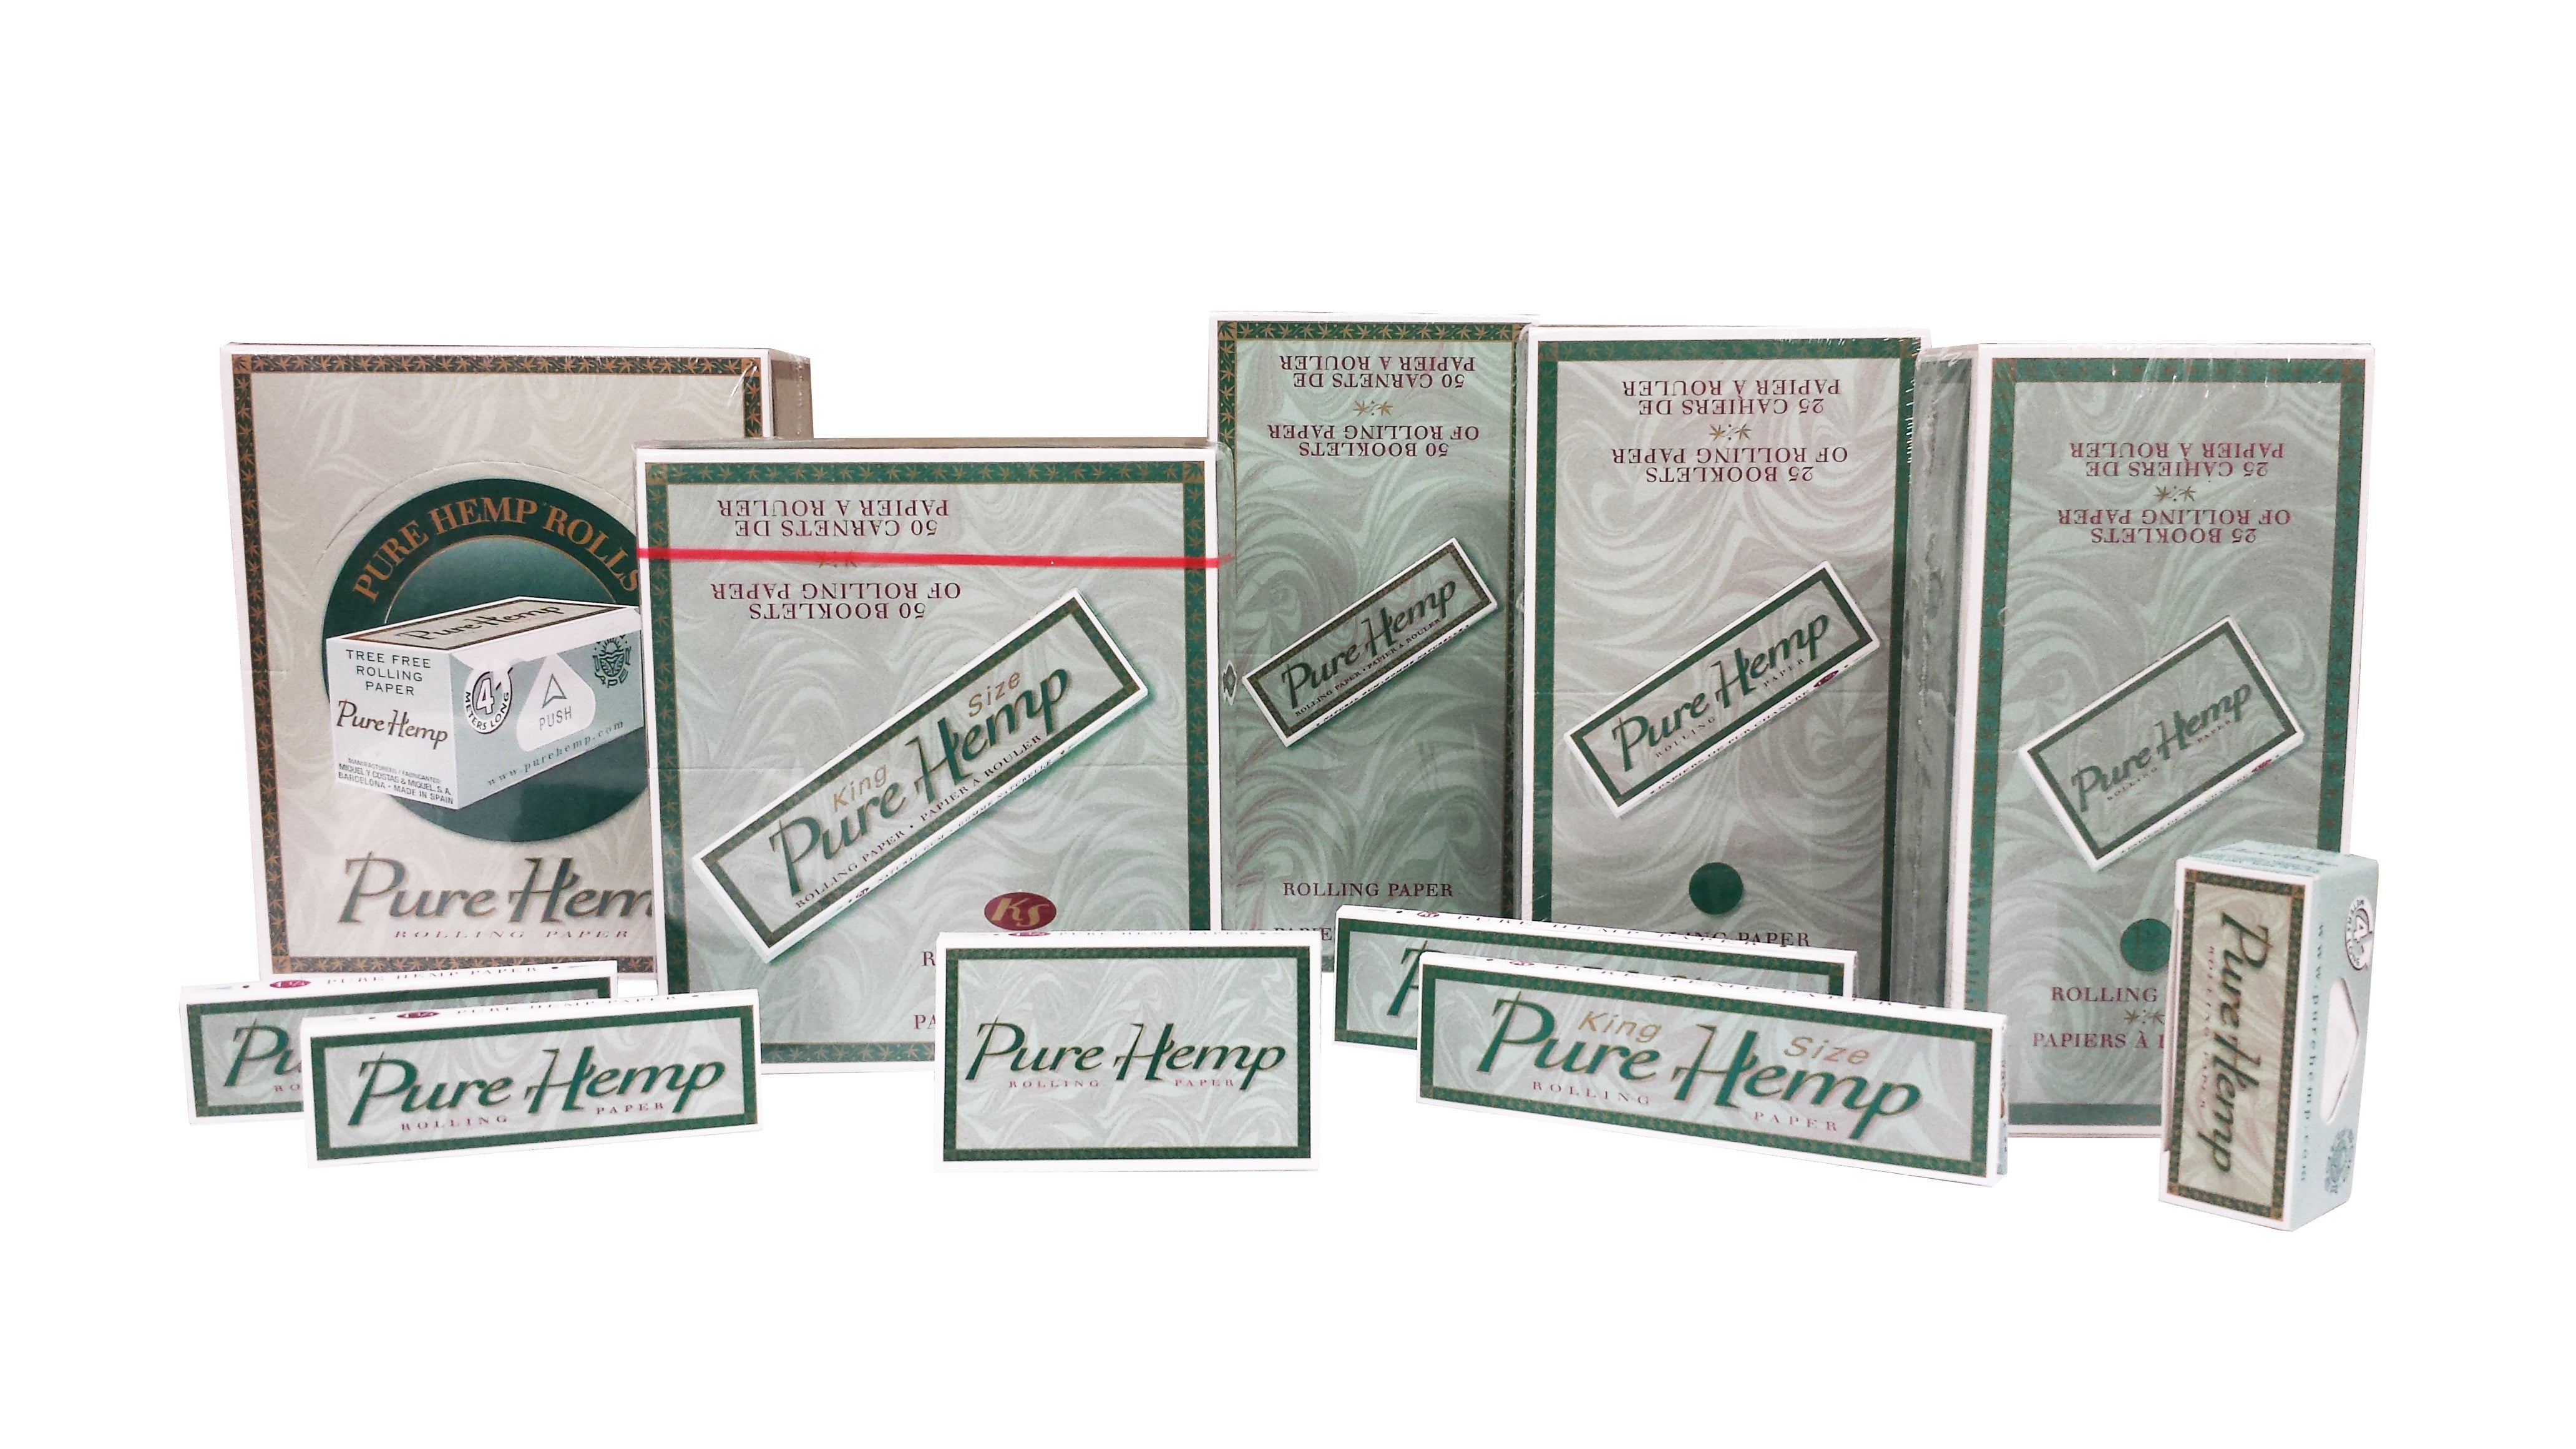 Pure Hemp Classic 1 1/2 Size Rolling Papers – Pure Hemp®